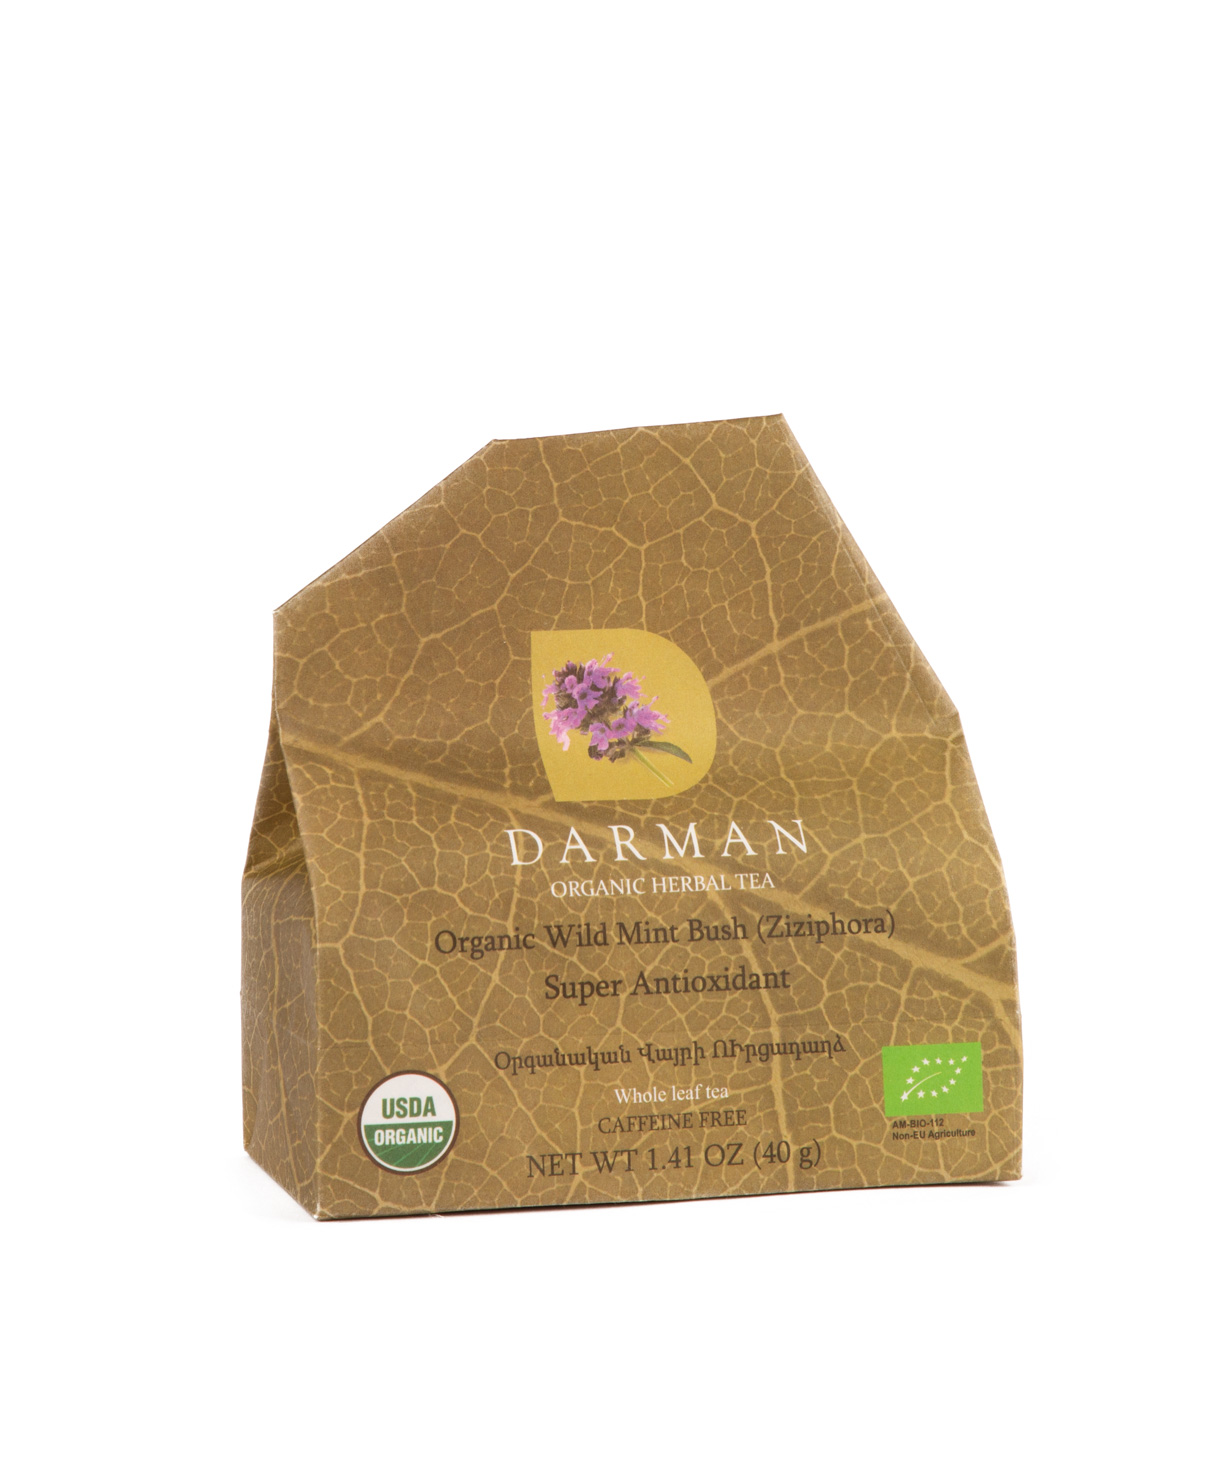 Чай `Darman organic herbal tea` органический, зизифора